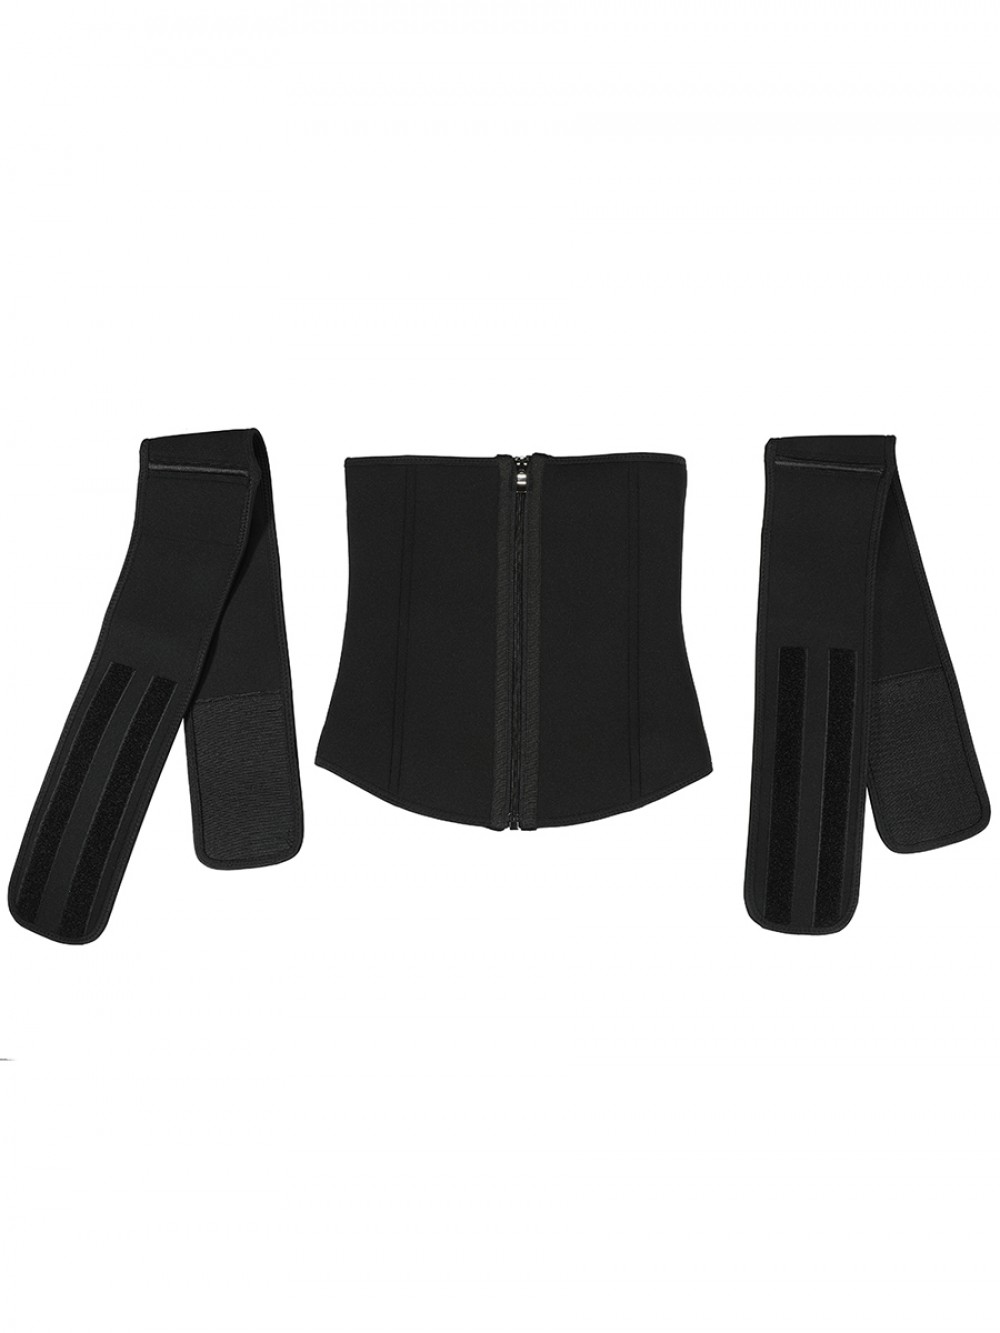 Black Neoprene Waist Trainer Big Size Detachable Belts Waist Control